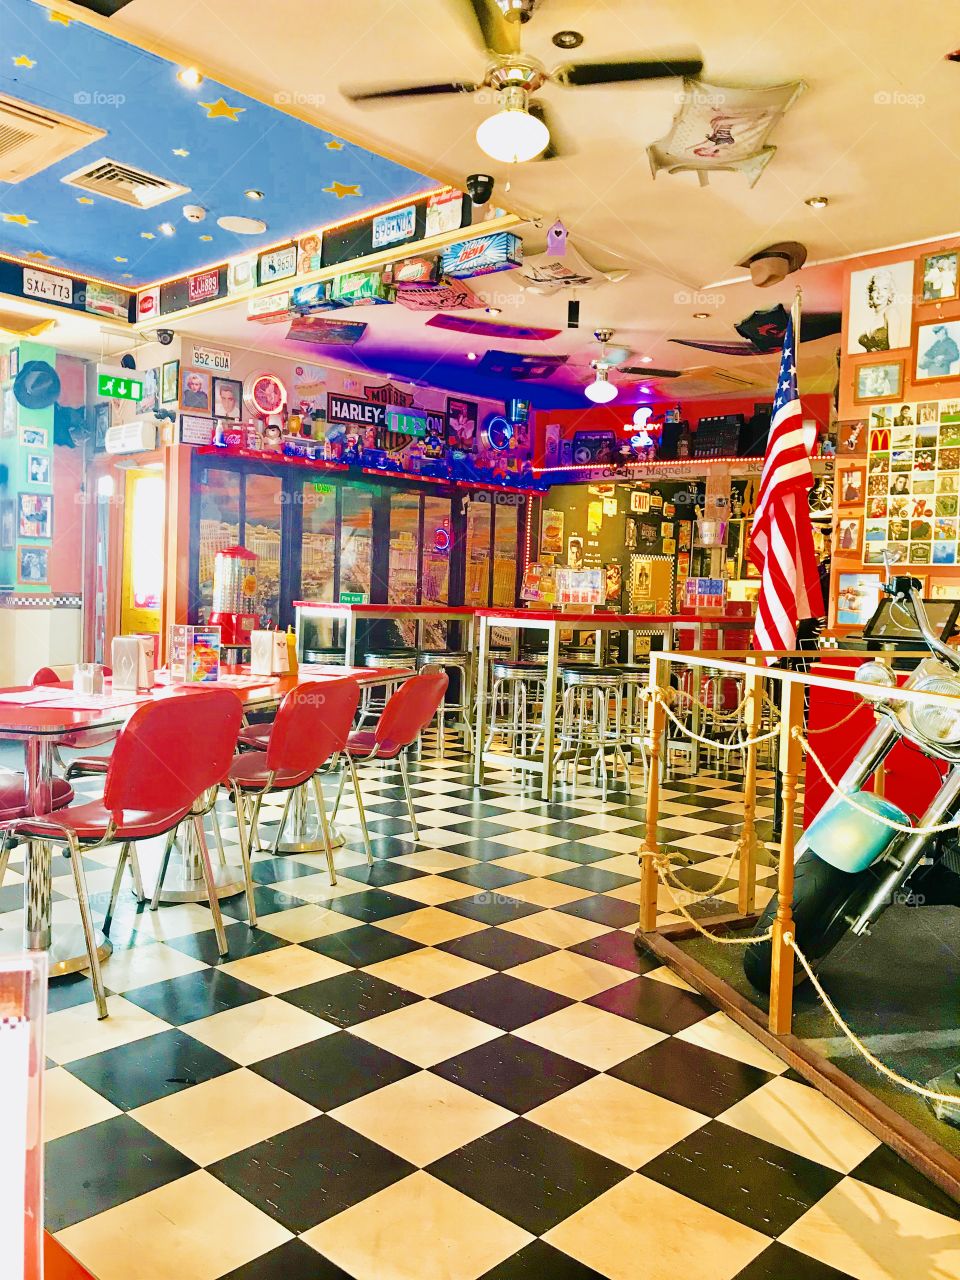 American Diner in Brighton 1950s America style grease United States retro USA vintage